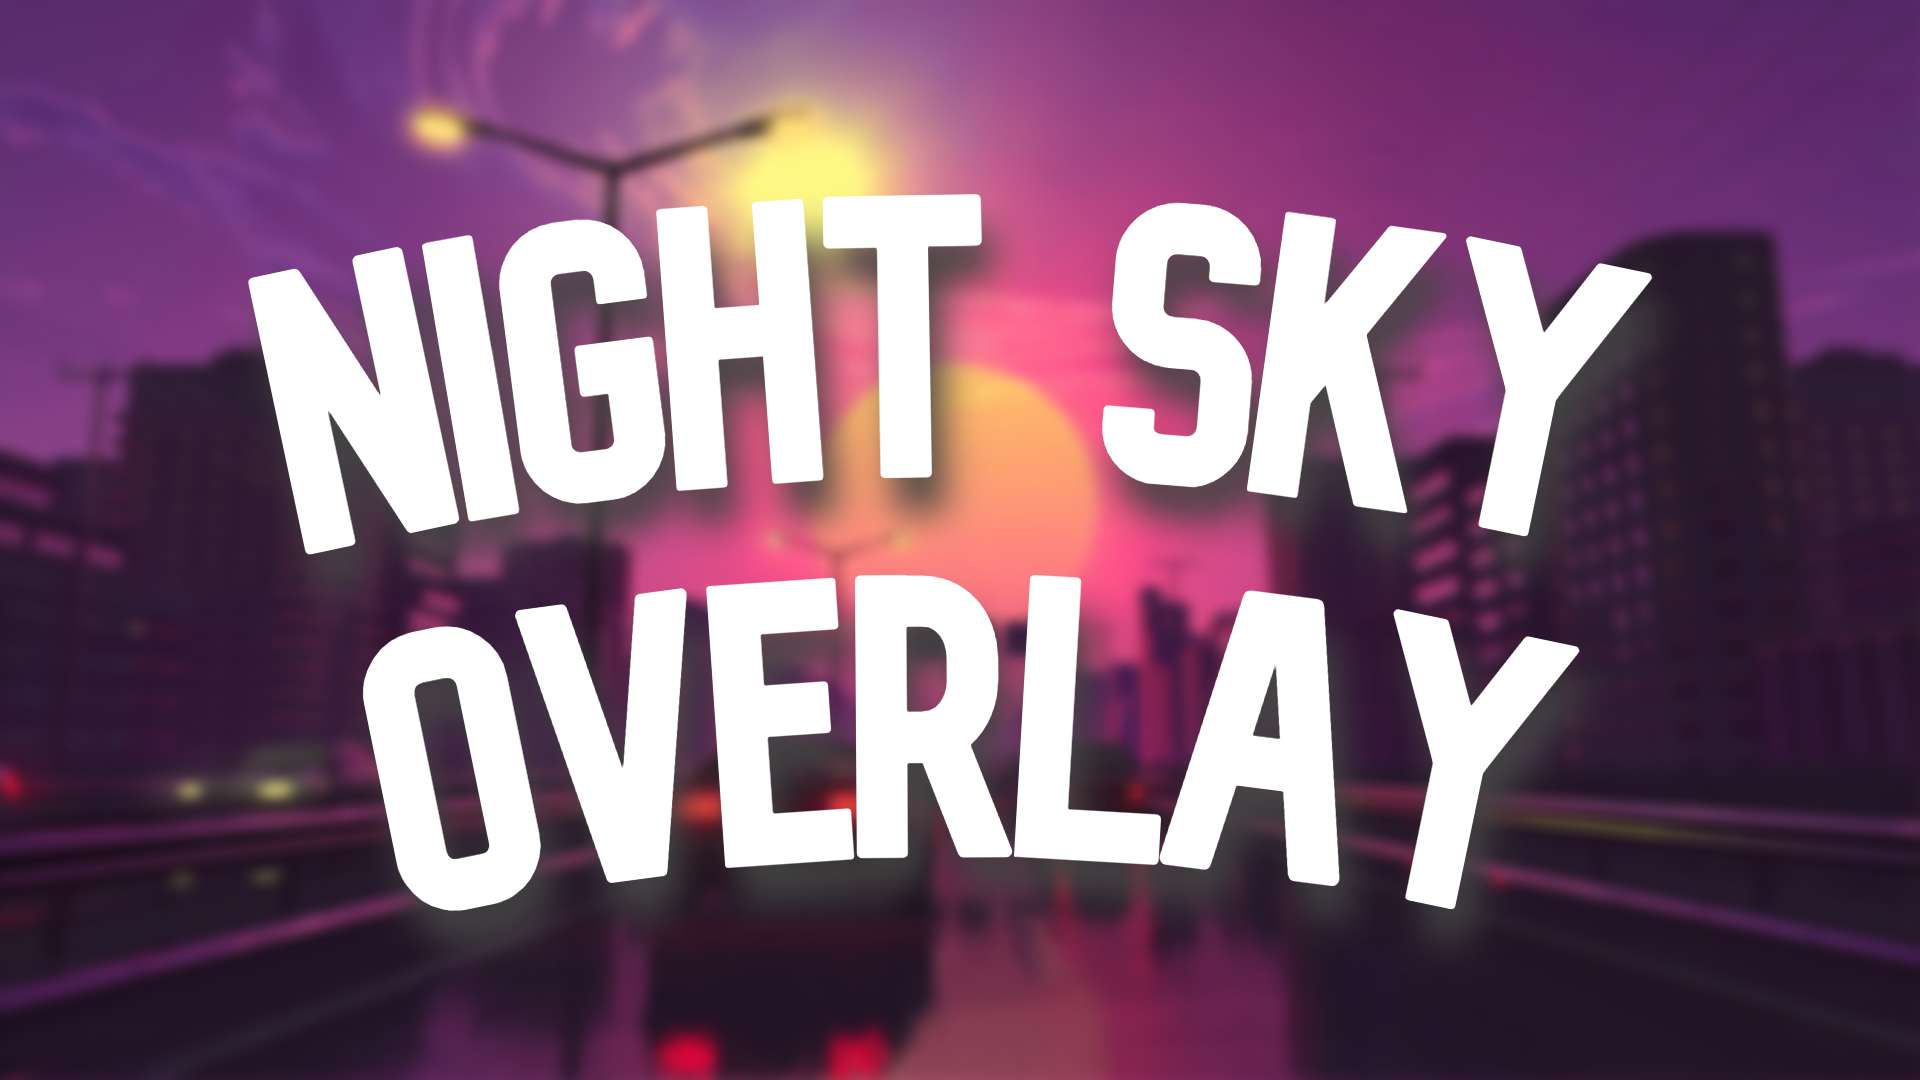 Night Sky Overlay #9 16 by rh56 on PvPRP